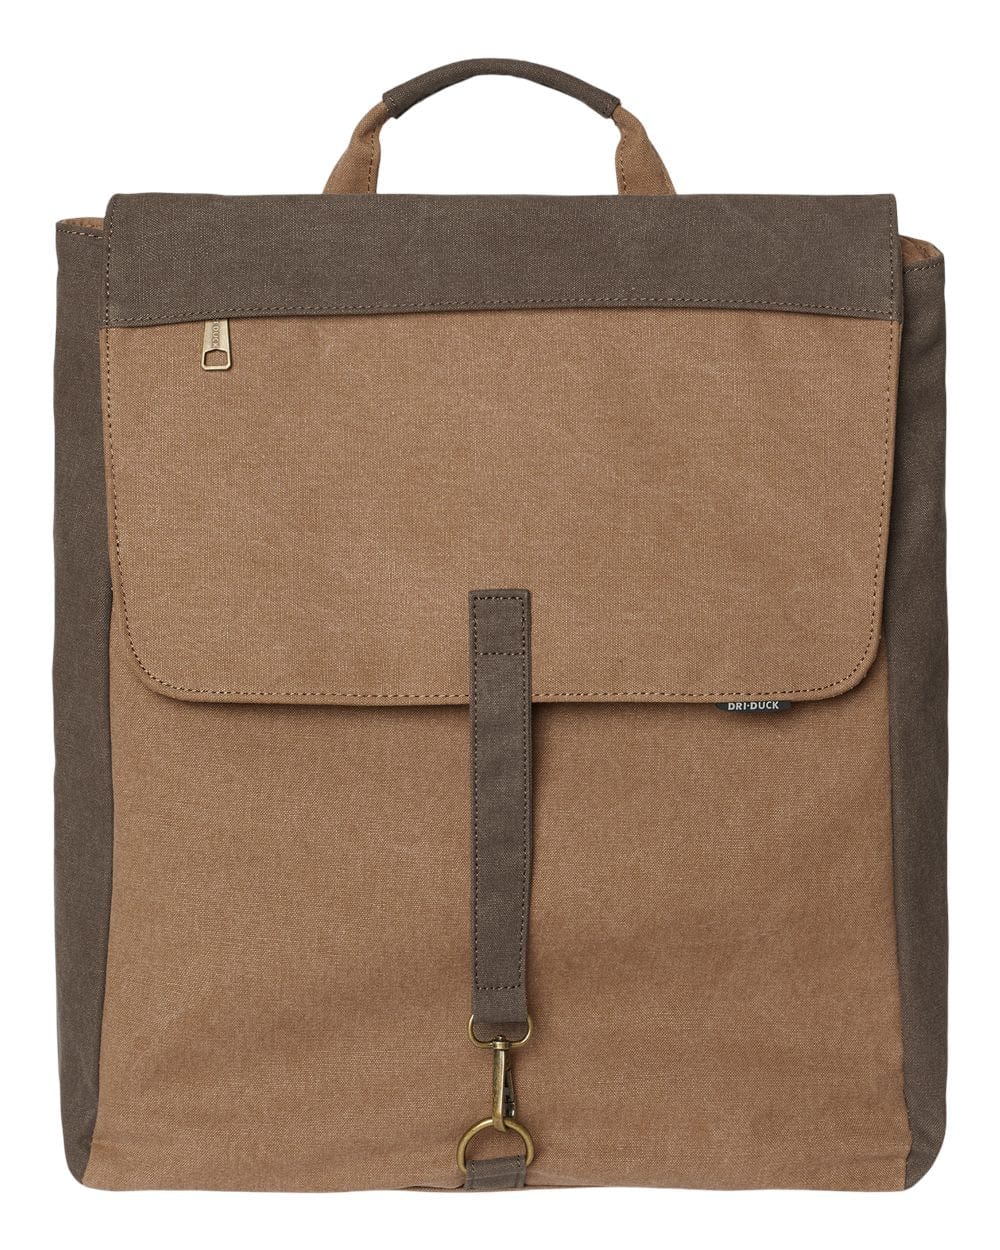 DRI DUCK Bags One Size / Field Khaki/Tobacco DRI DUCK - Commuter Backpack